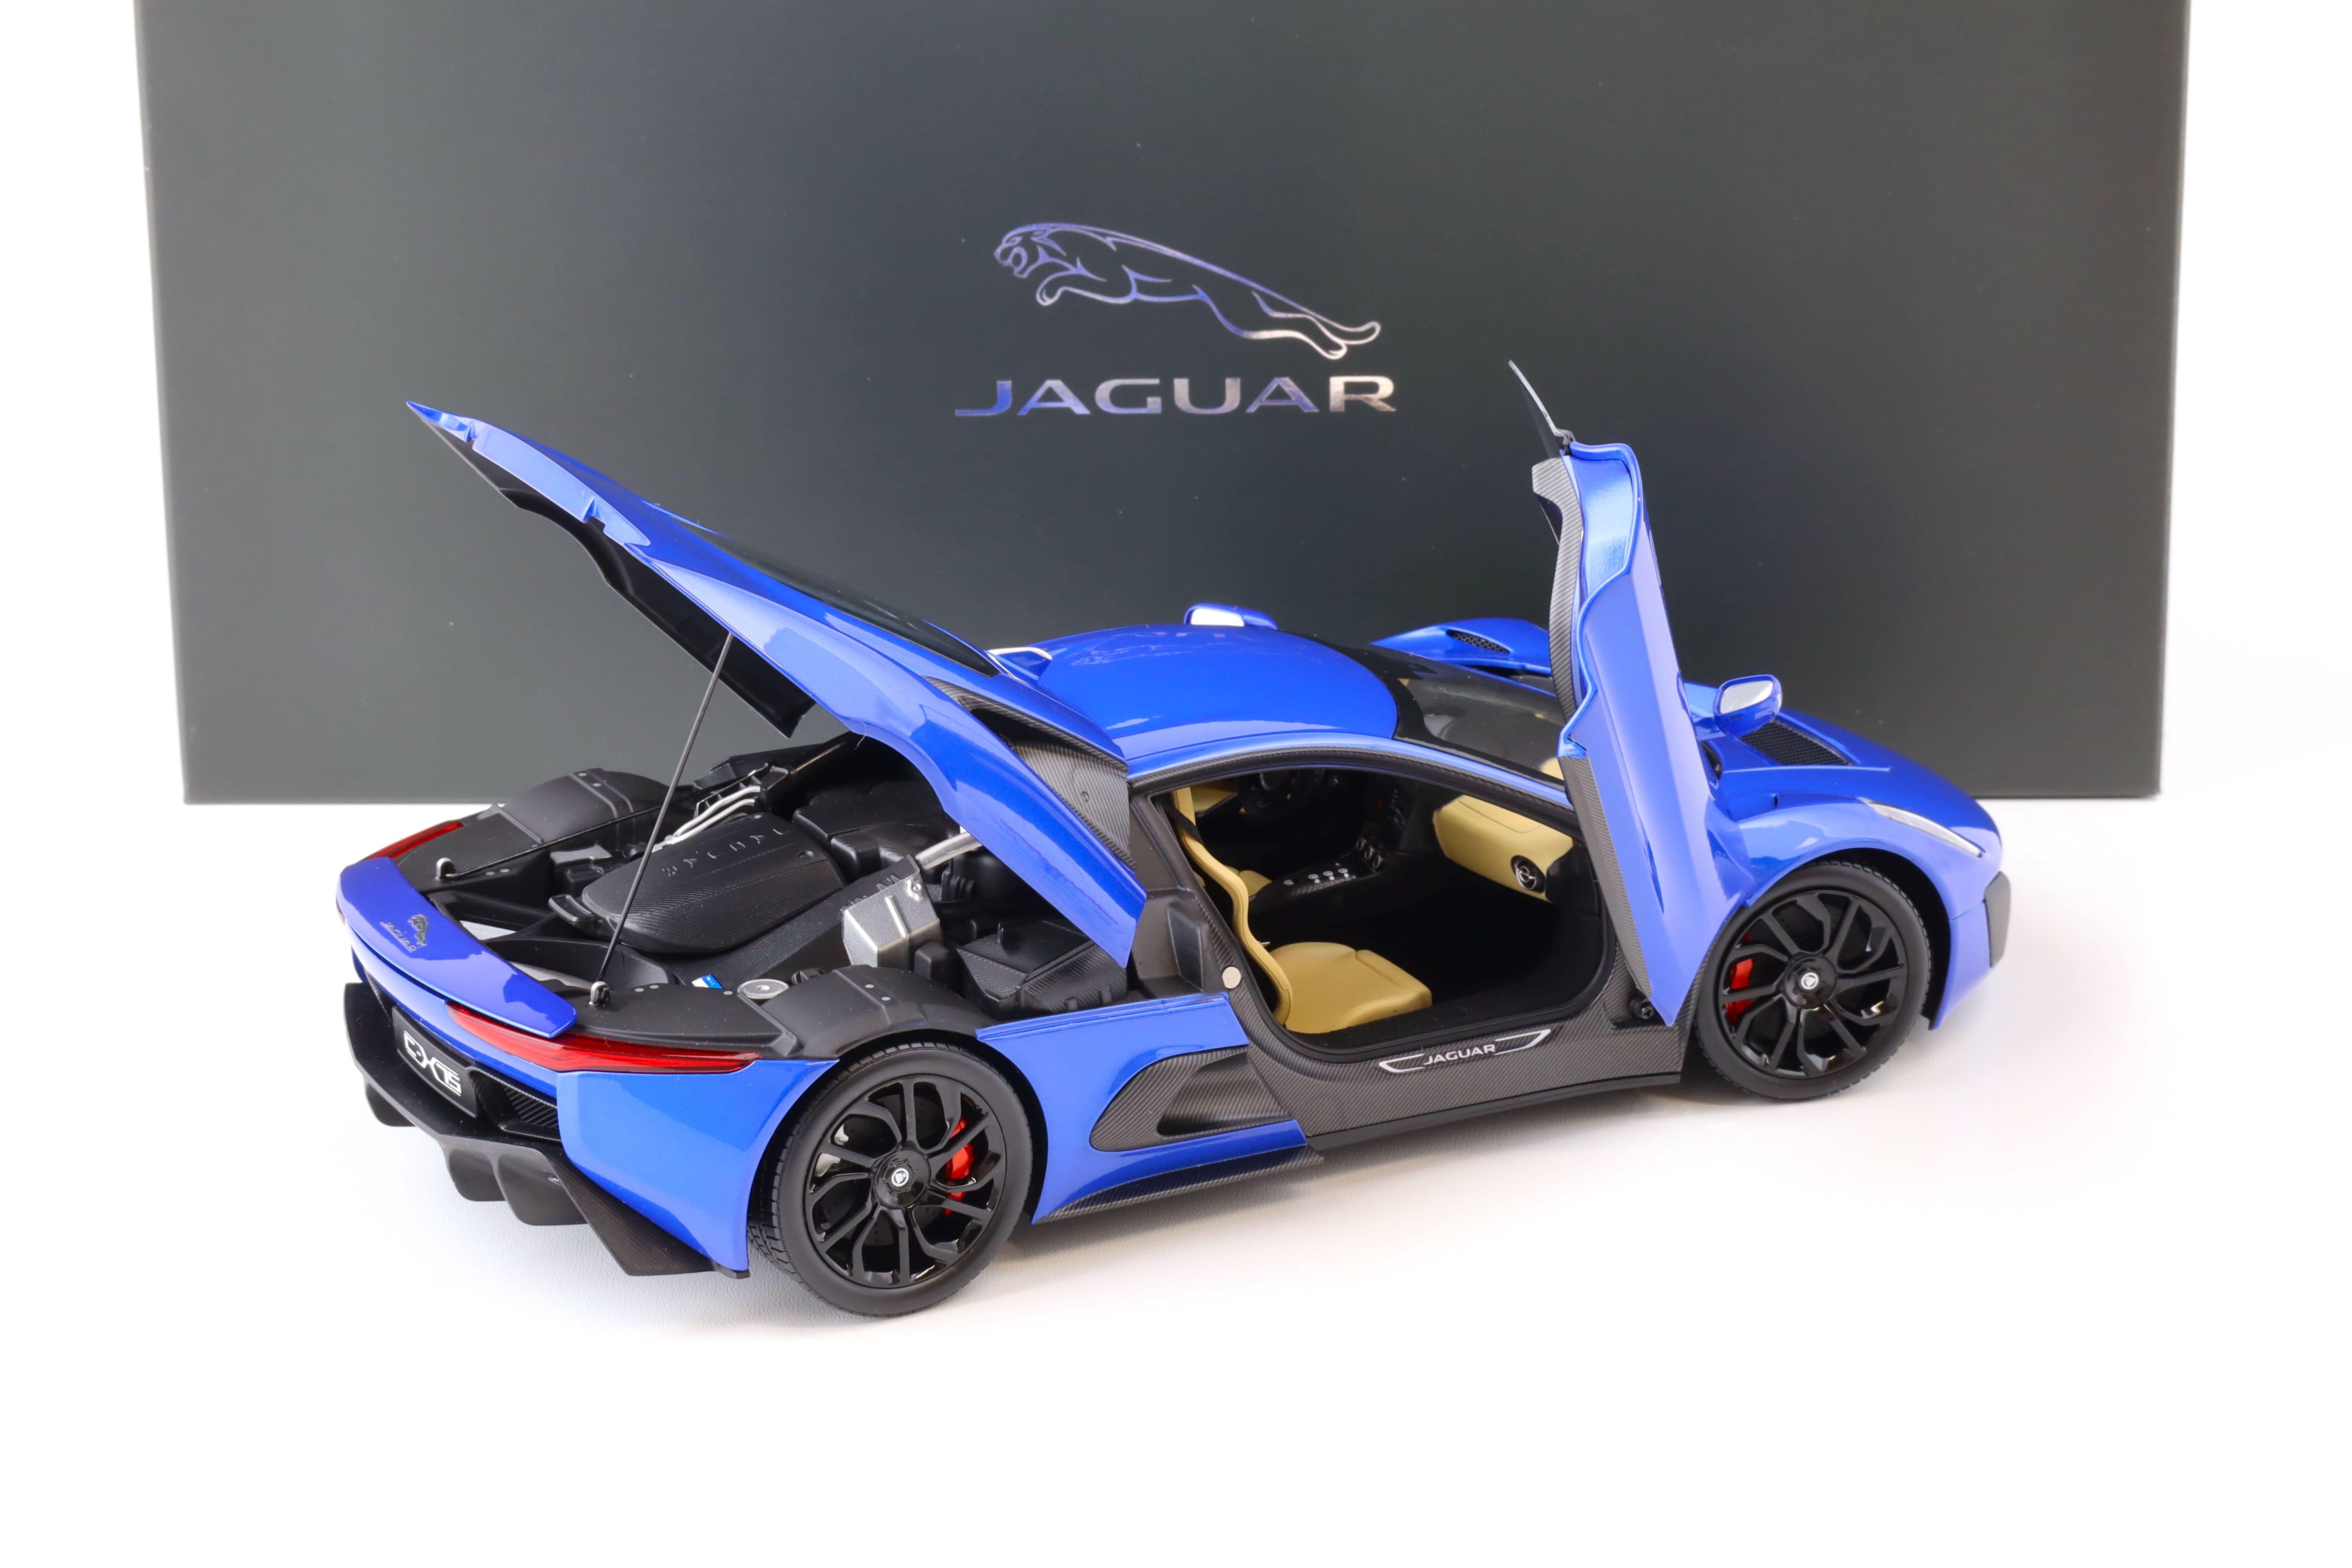 1:18 Almost Real Jaguar C-X75 blue metallic 810606